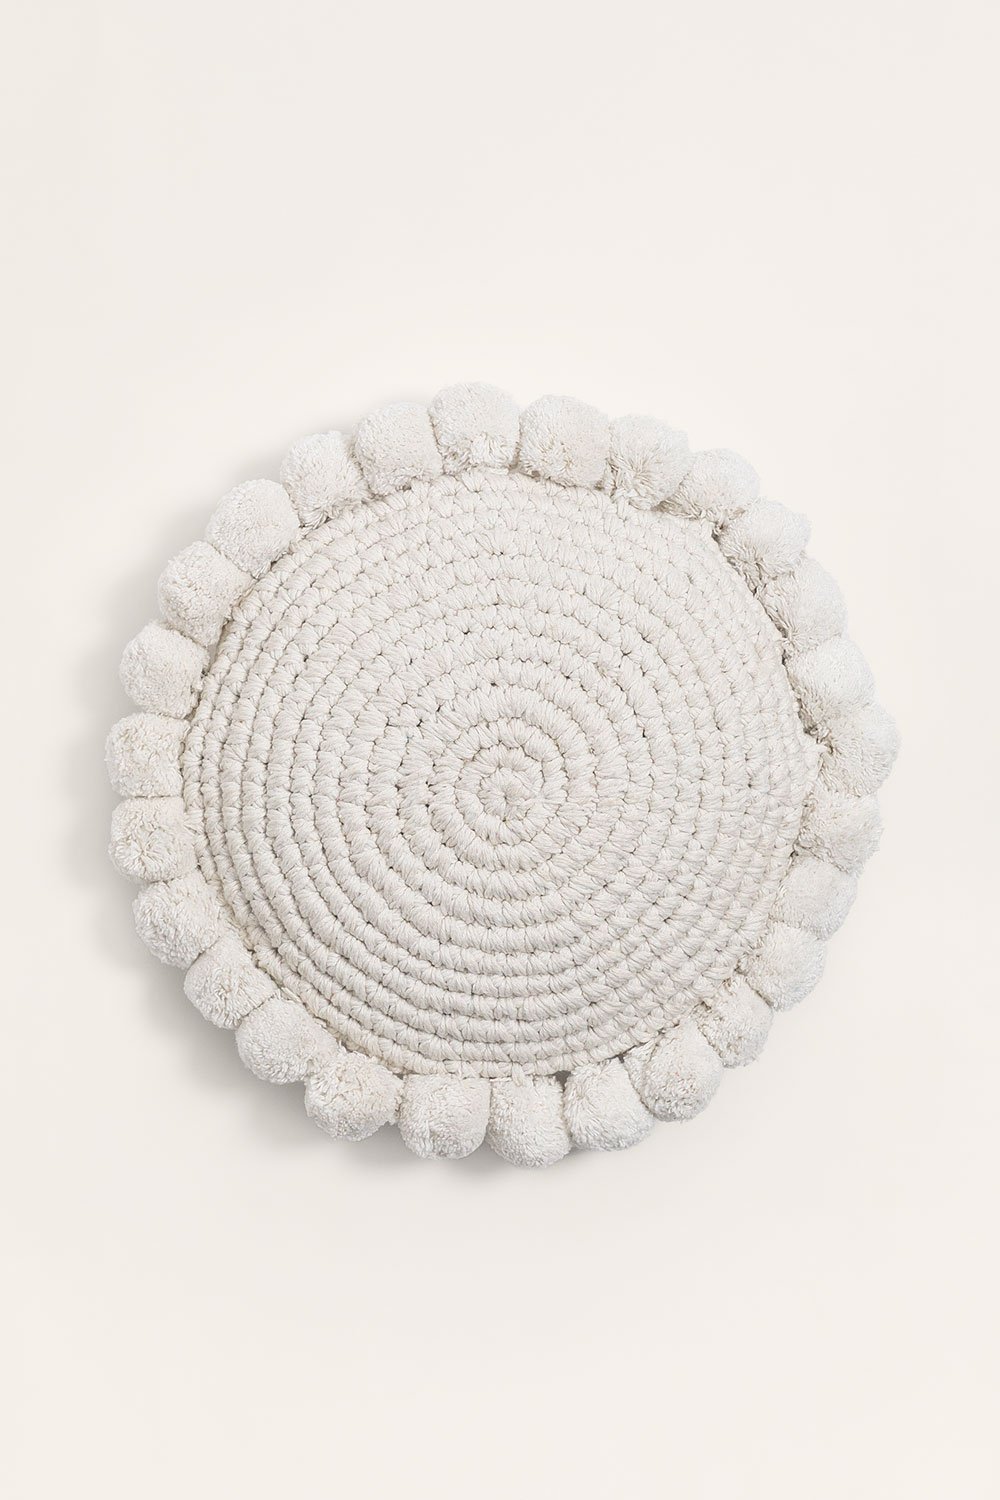 Cuscino rotondo in cotone (Ø30 cm) Yilda - SKLUM